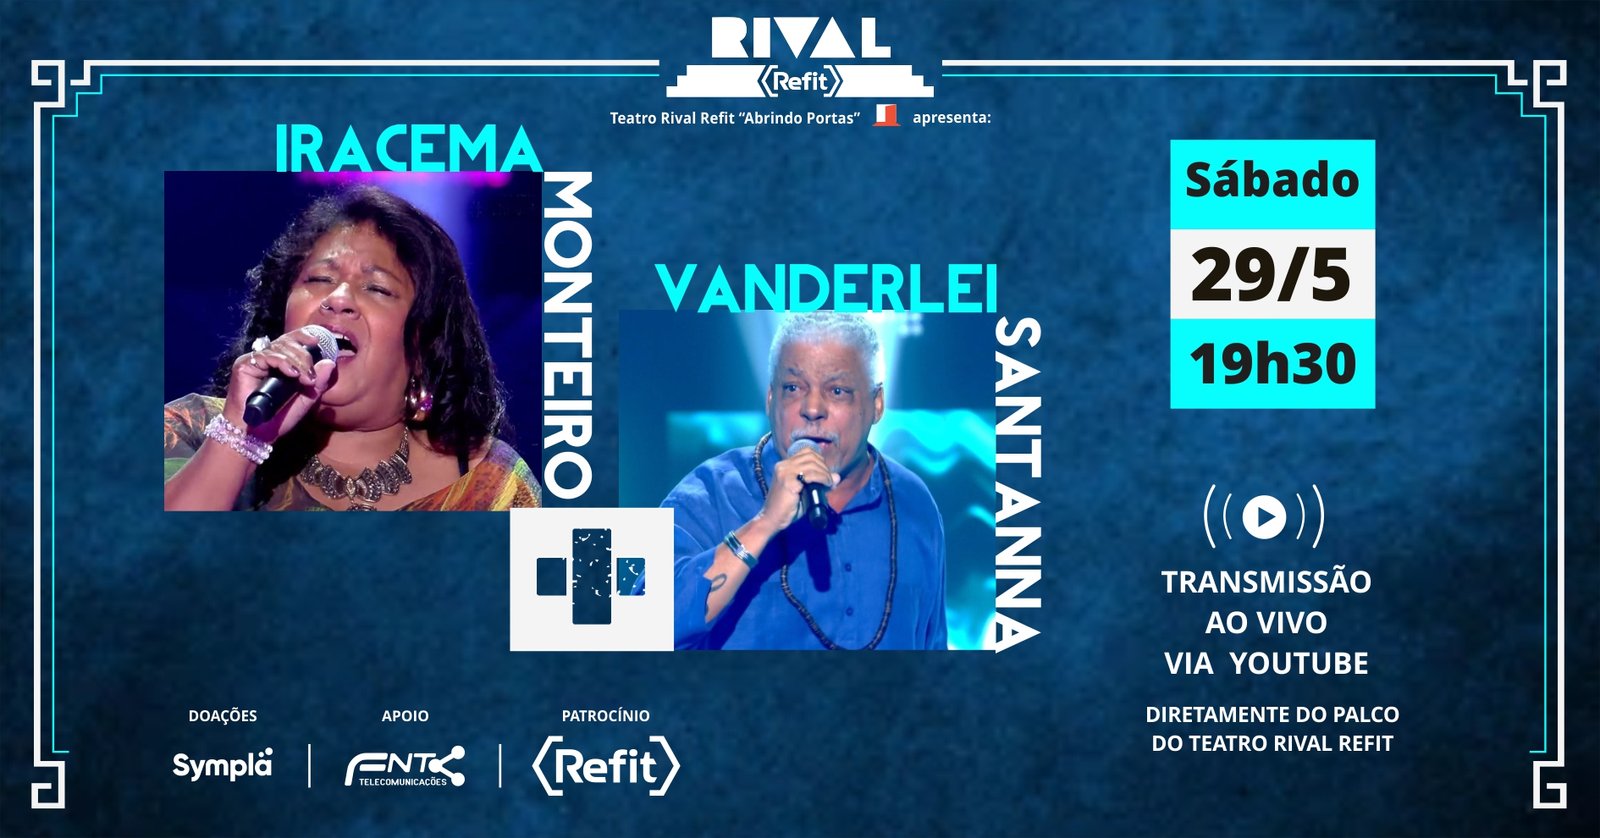 Teatro Rival Refit “abrindo portas”: Iracema Monteiro e Vanderlei Santana